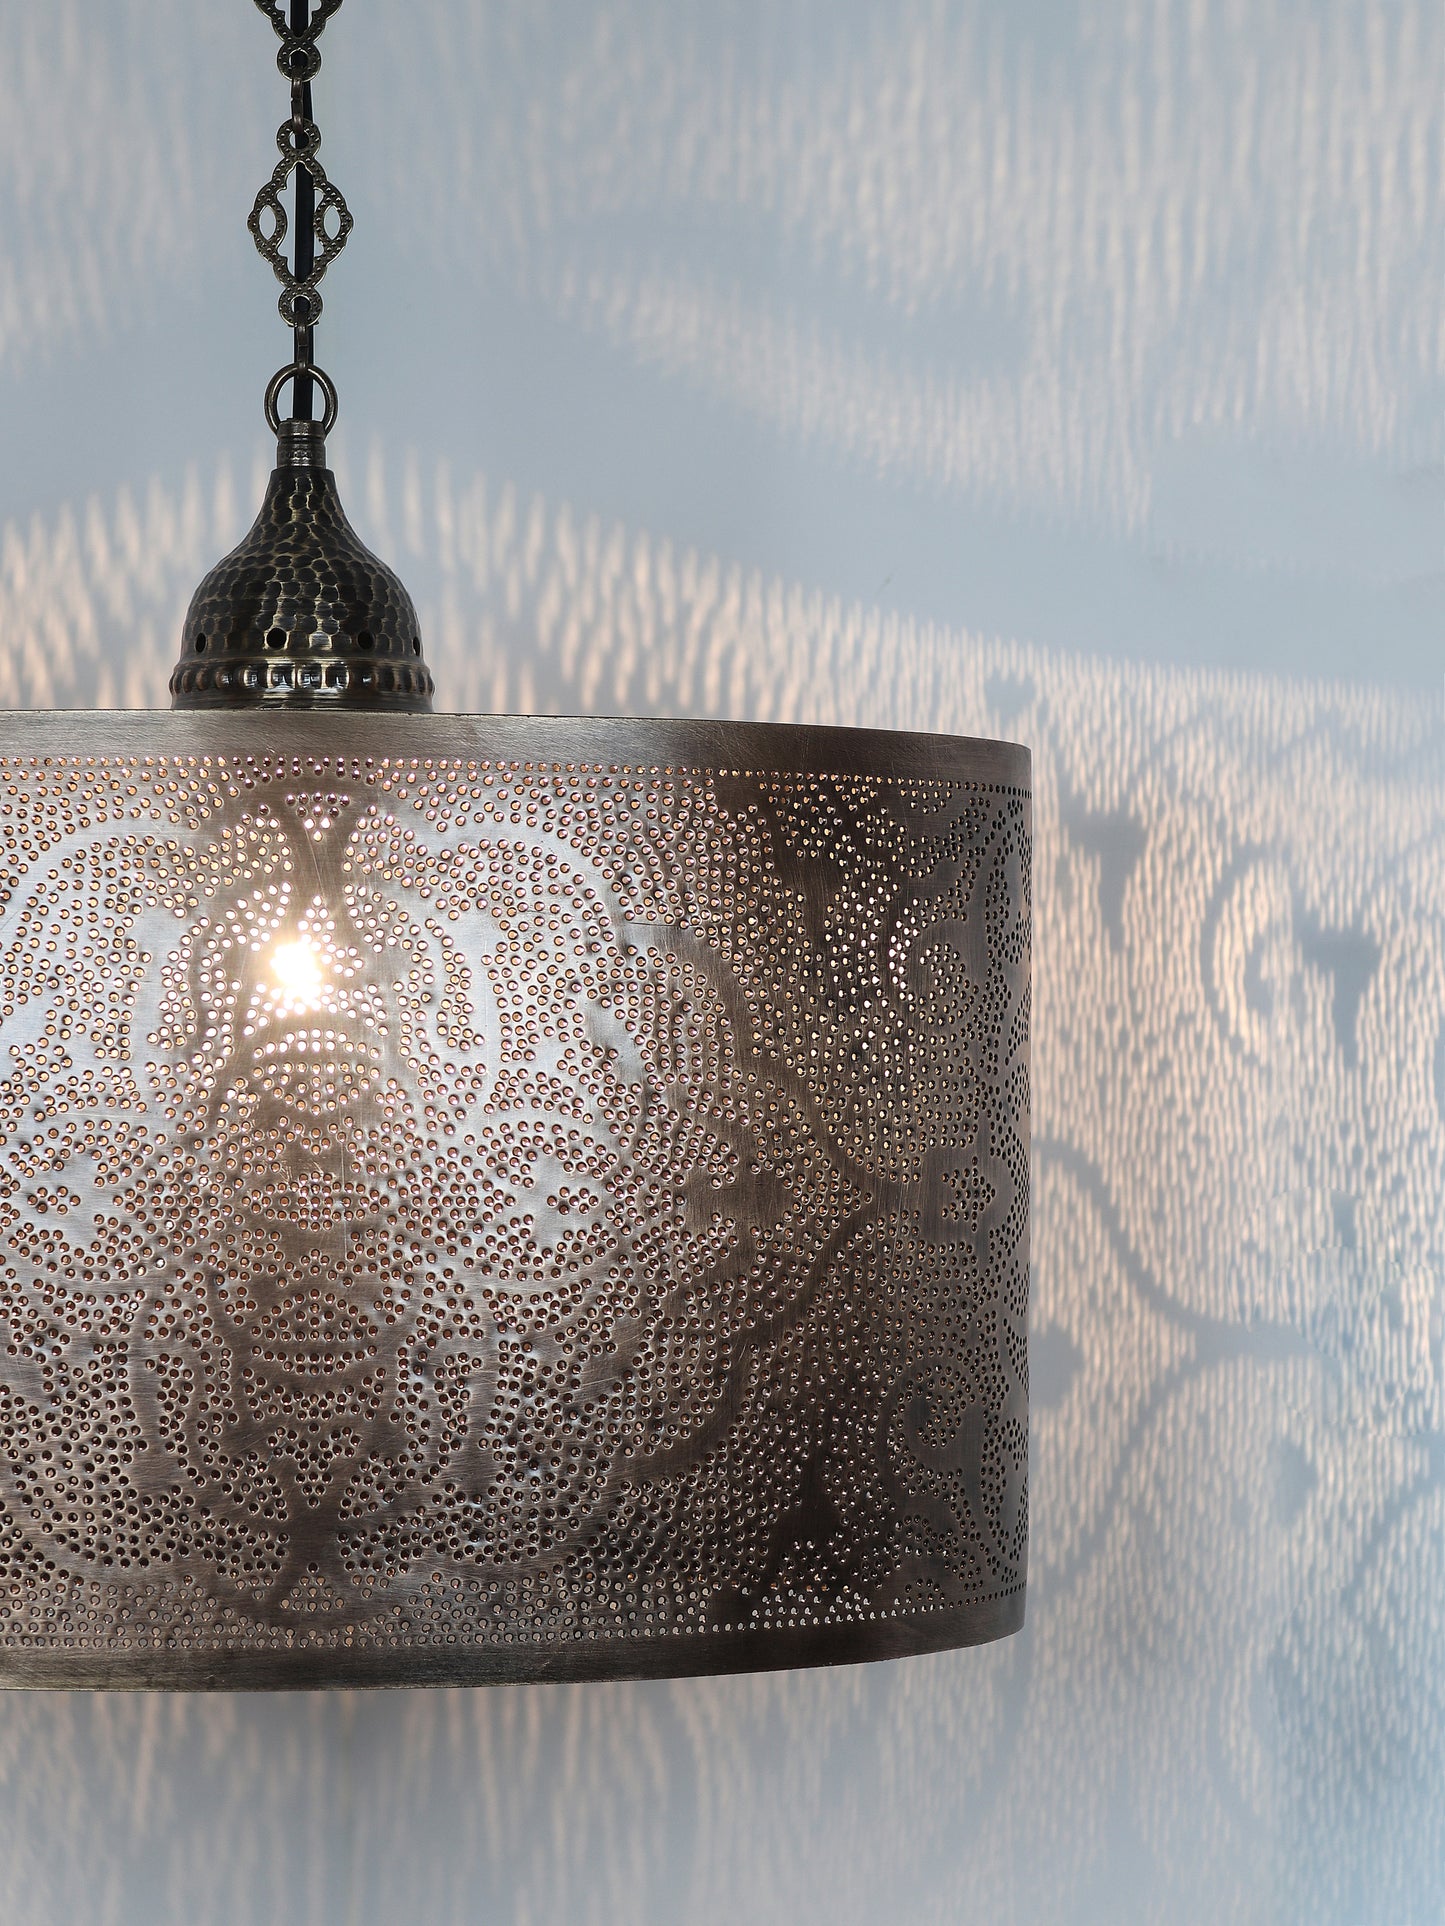 Moroccan Living Room Hanging Lamp Shade